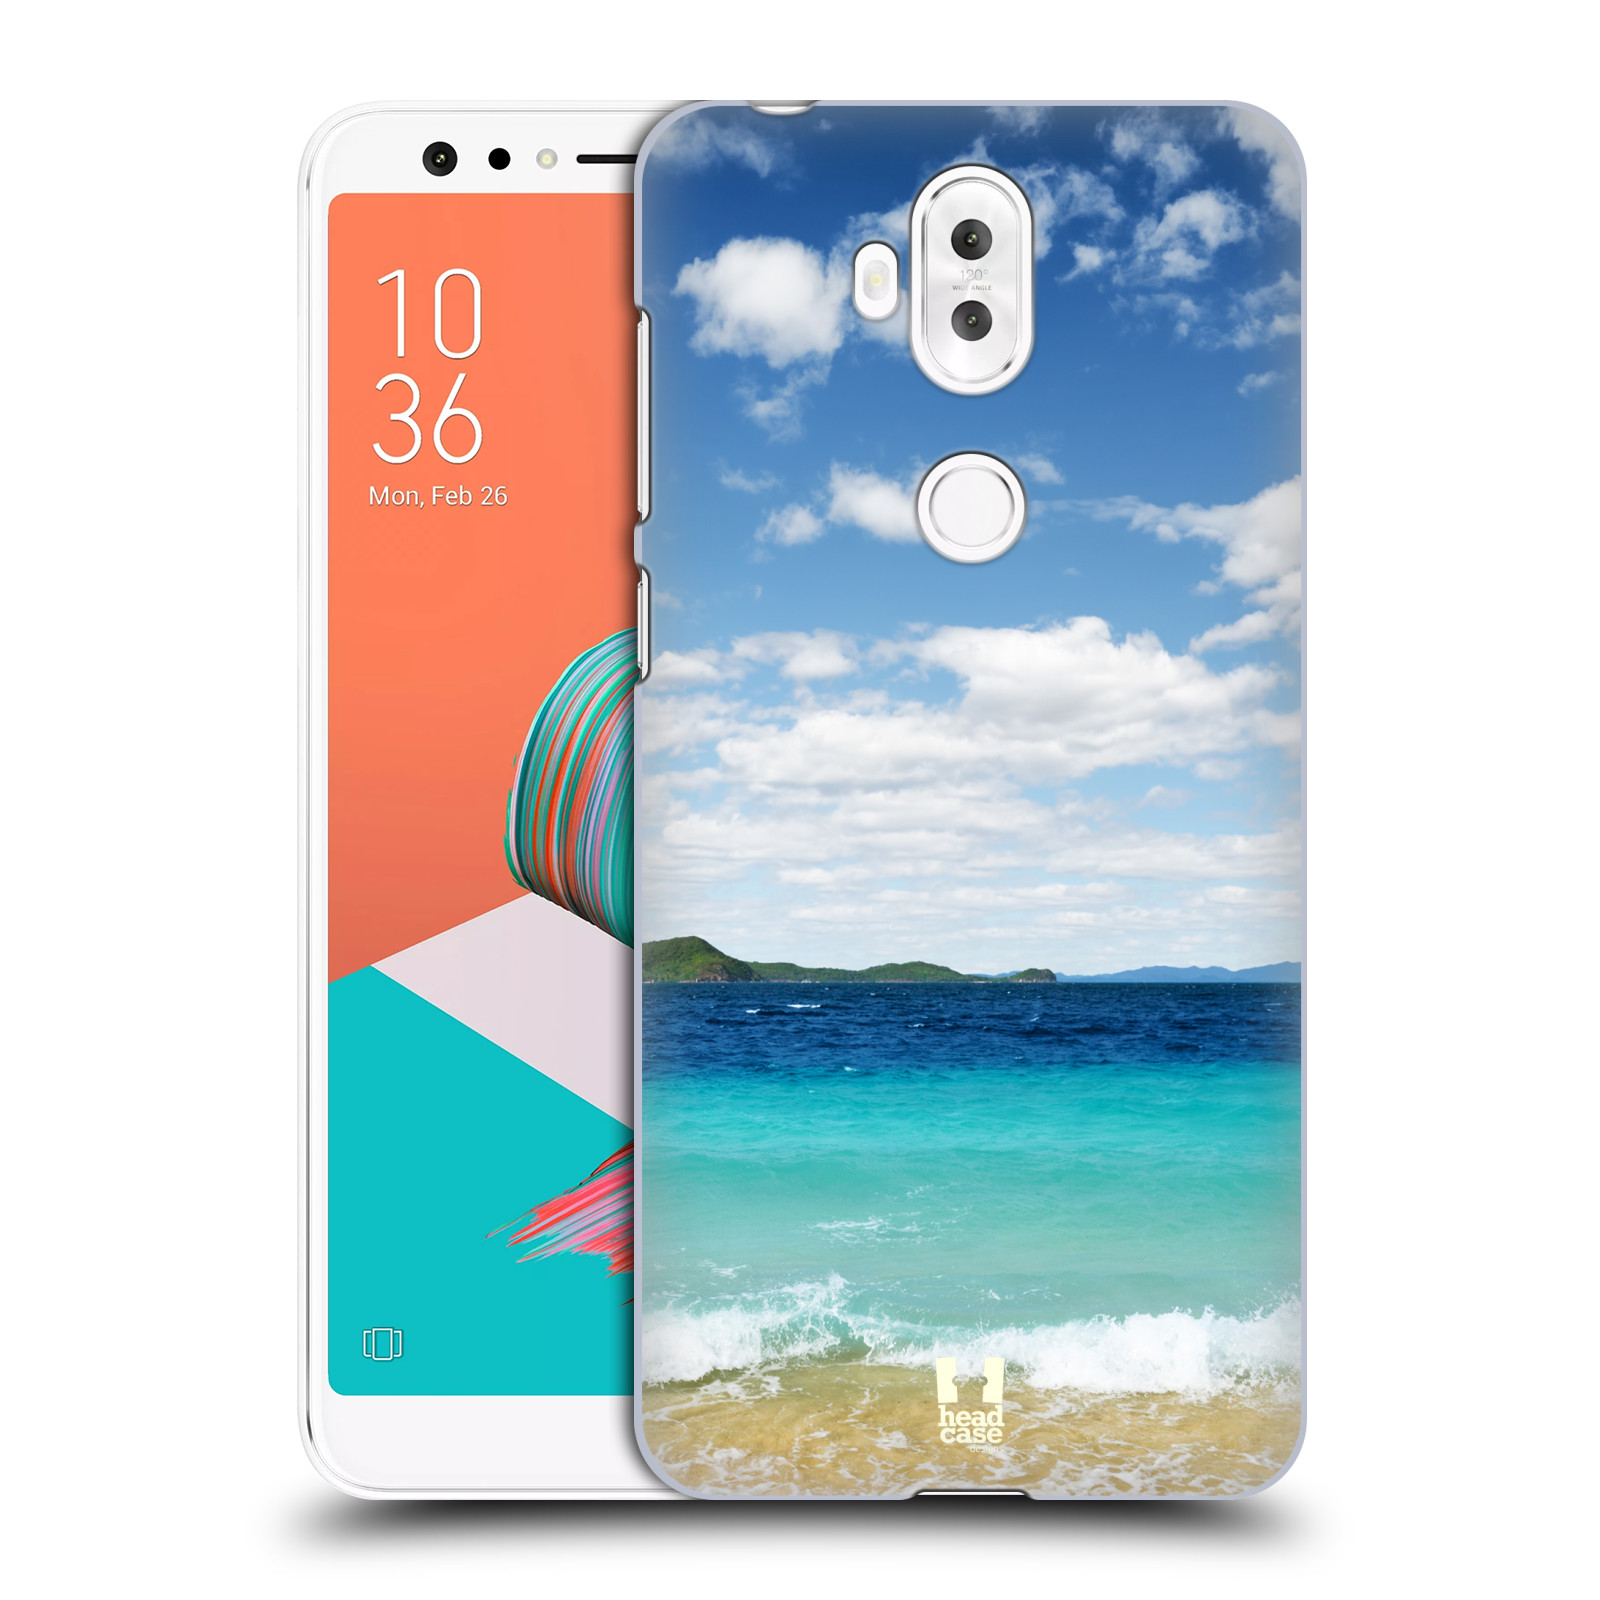 HEAD CASE plastový obal na mobil Asus Zenfone 5 LITE ZC600KL vzor Pláže a Moře VZDÁLENÝ OSTROV